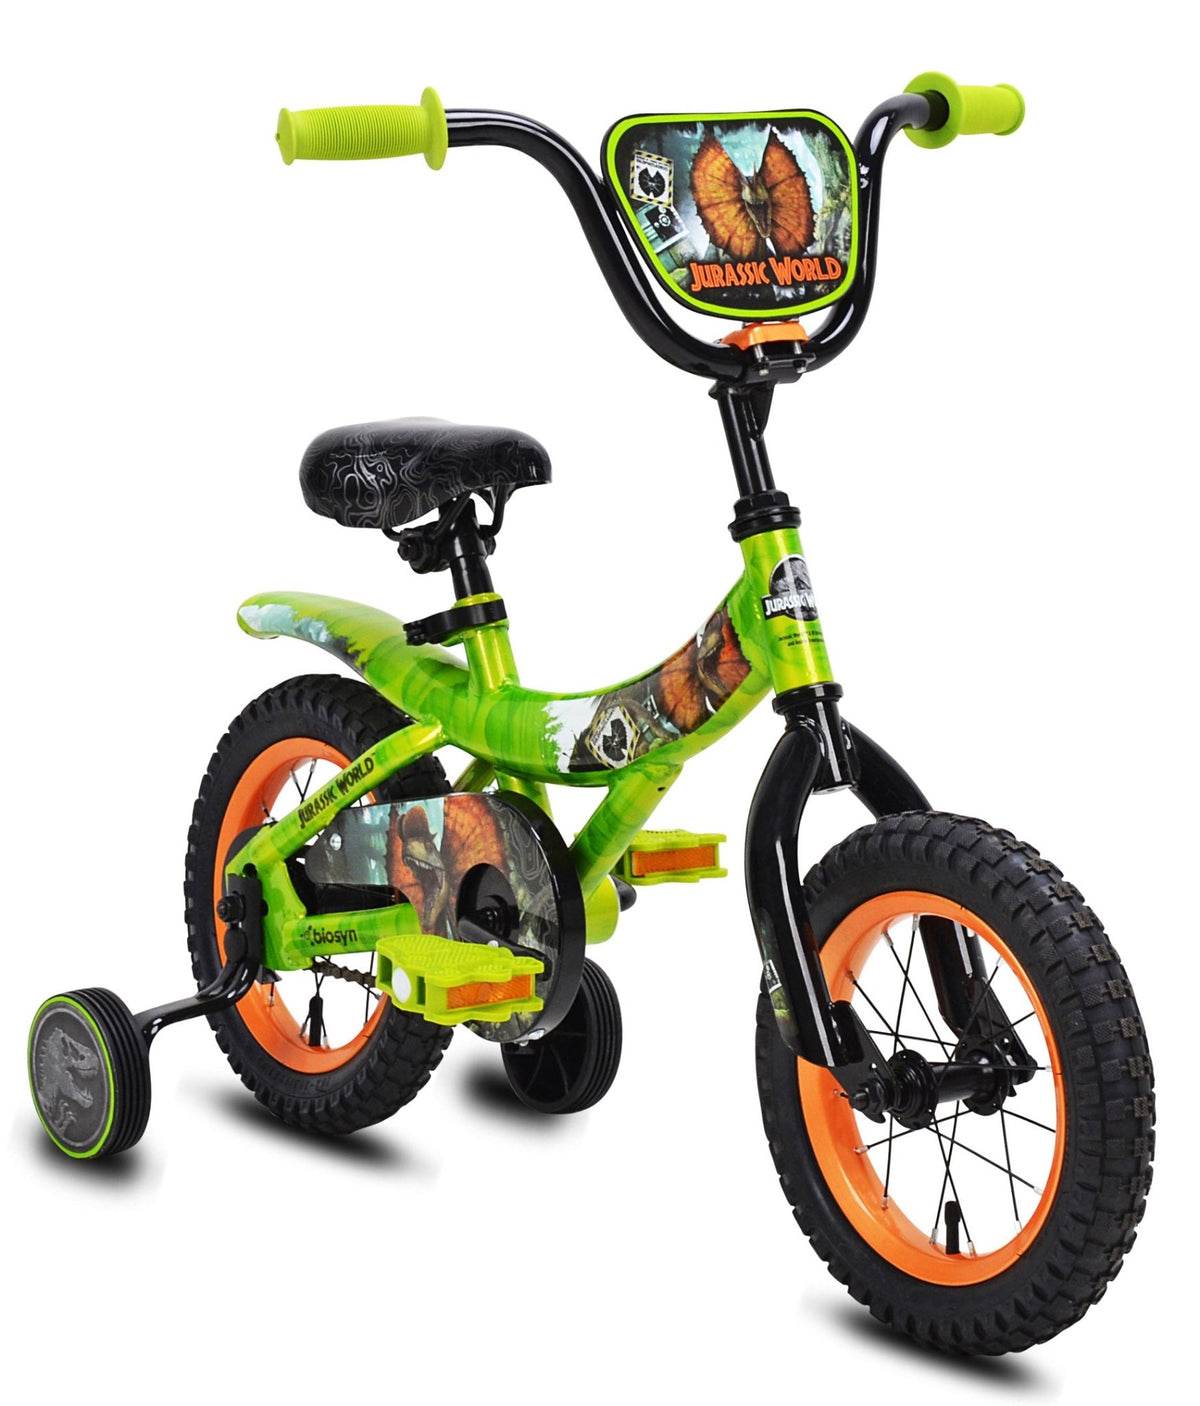 12" Jurassic World™ Dino | Bike for Kids Ages 2-4